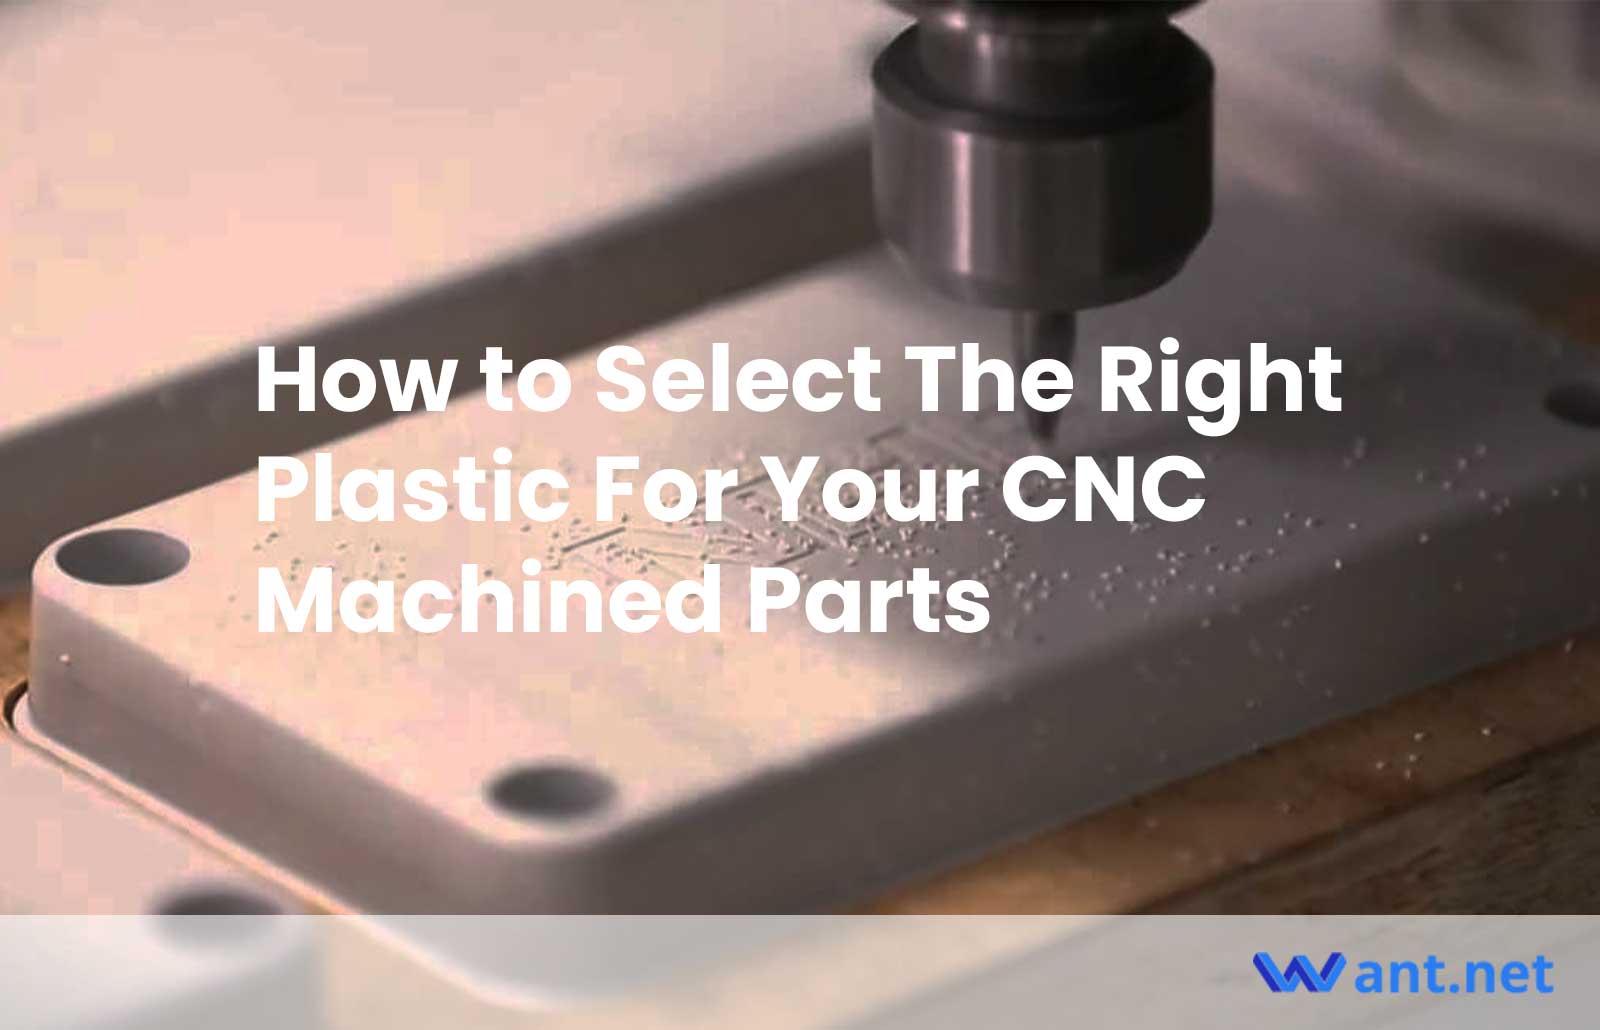 plastic cnc machining